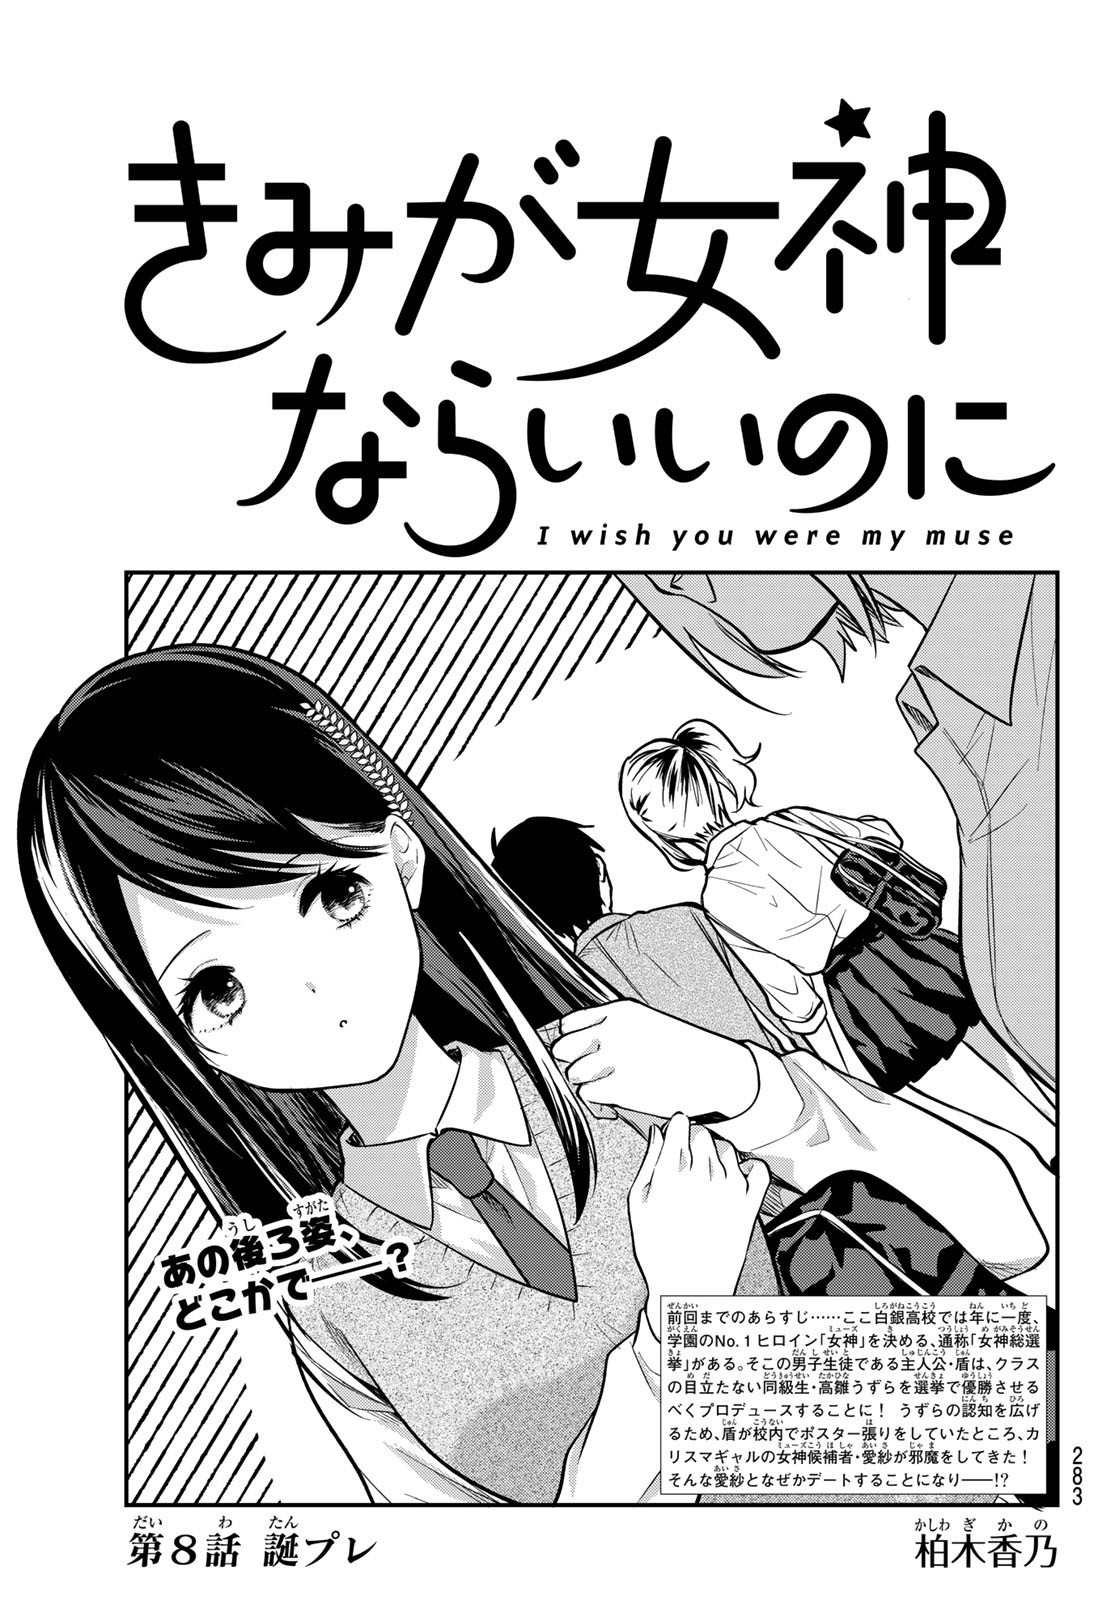 Kimi ga Megami Nara Ii no ni (I Wish You Were My Muse) - Chapter 008 - Page 3